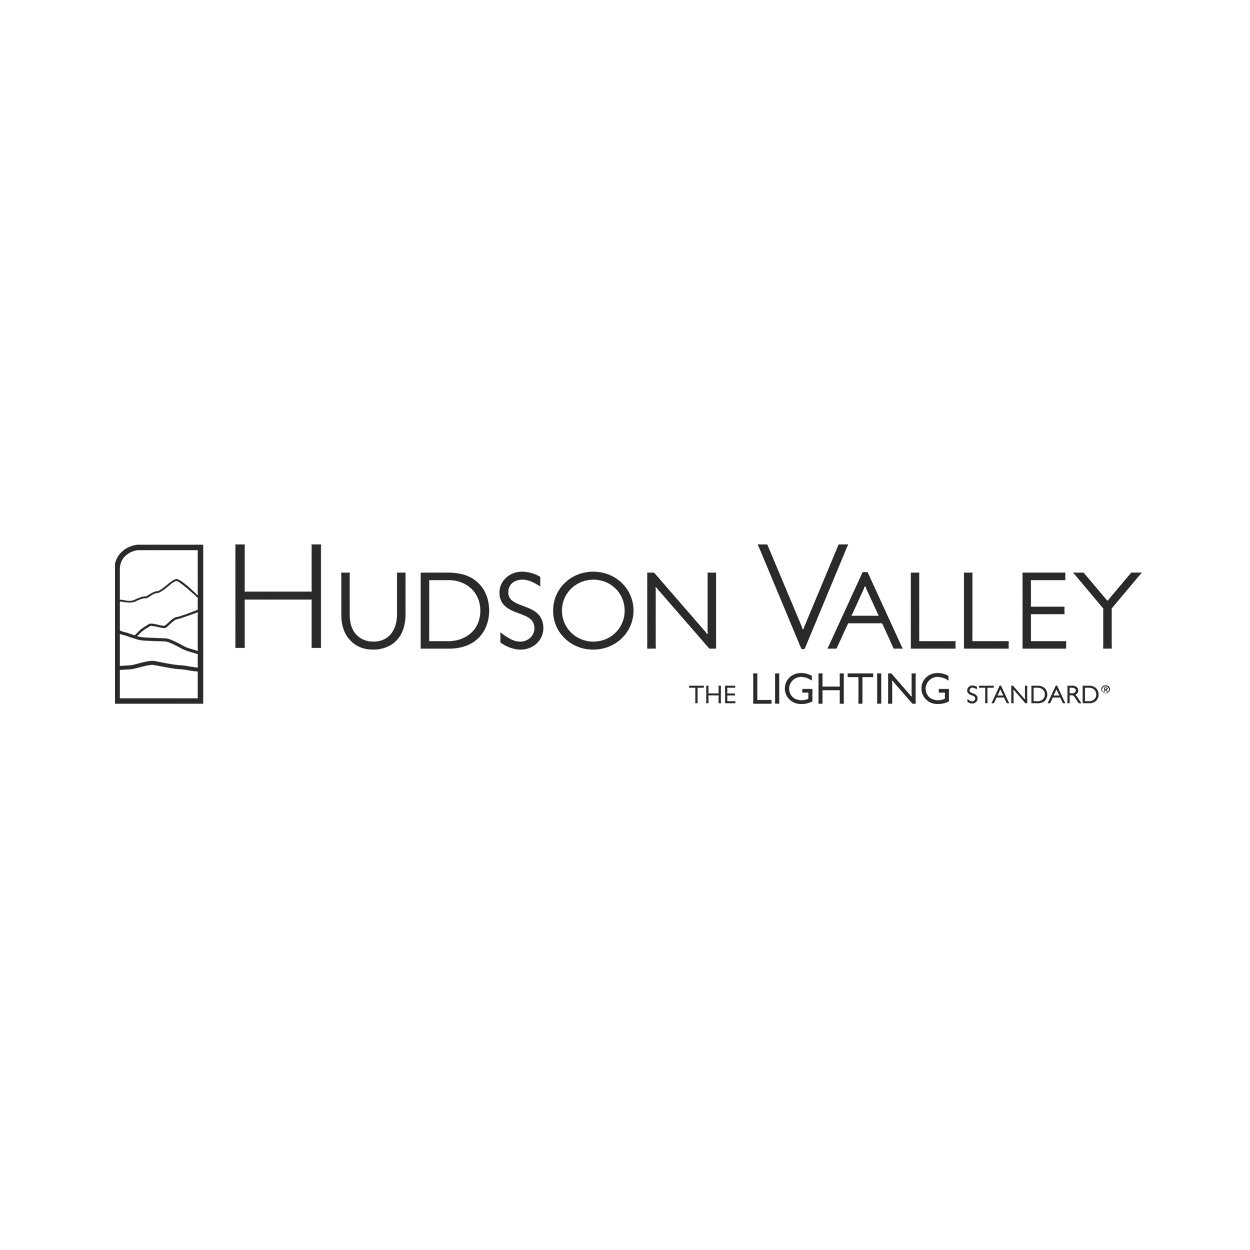 Hudson Valley.jpg